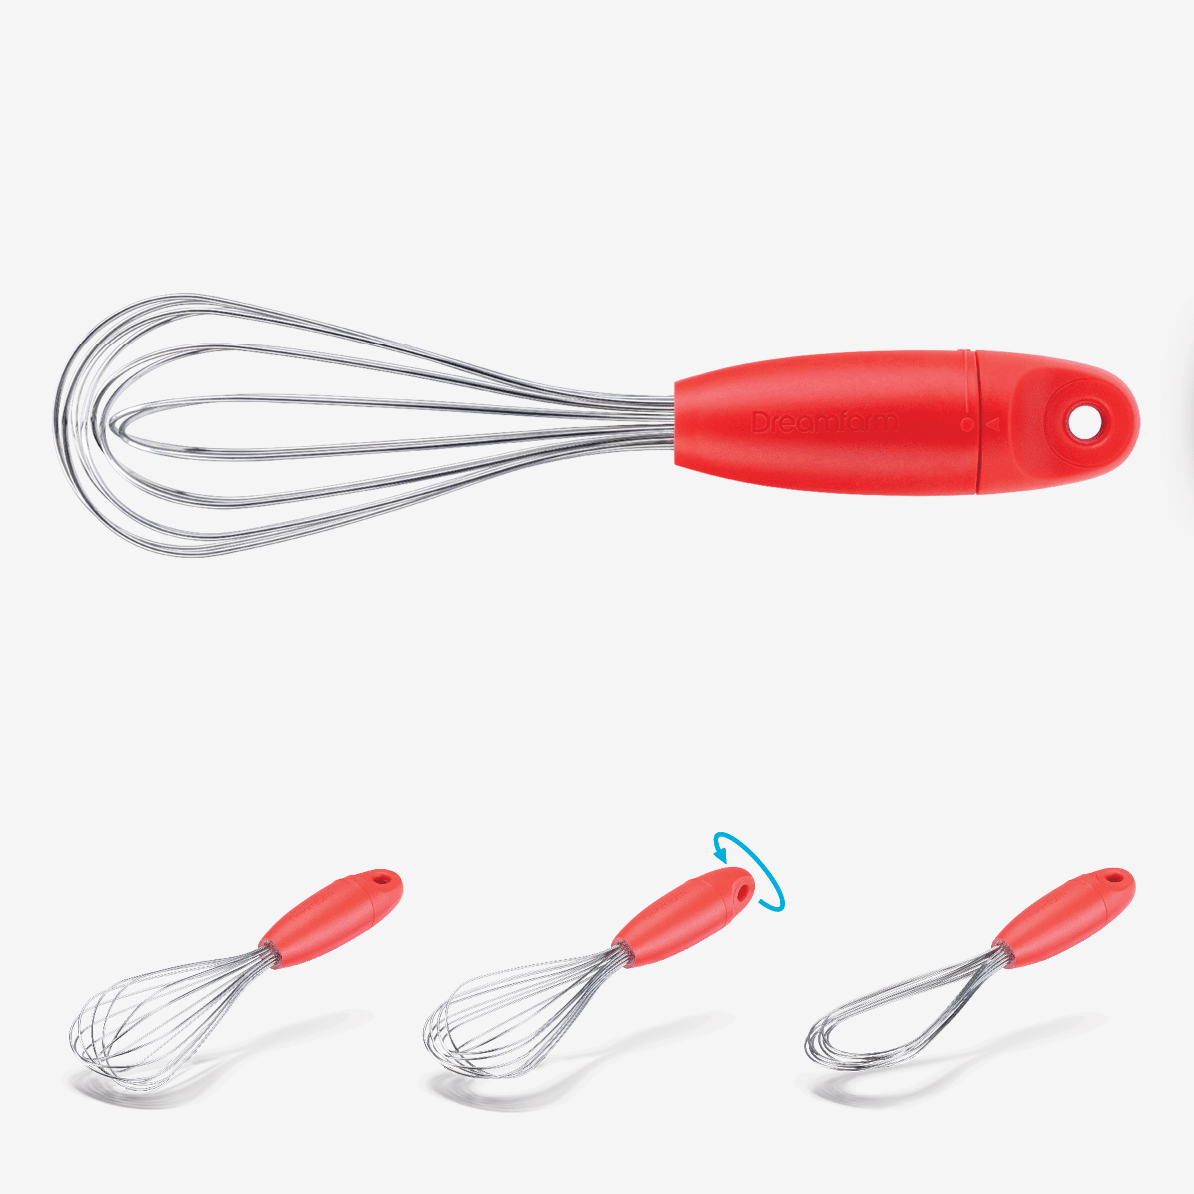 Dreamfarm Mini Flisk, Adjustable Whisk - Spoons N Spice